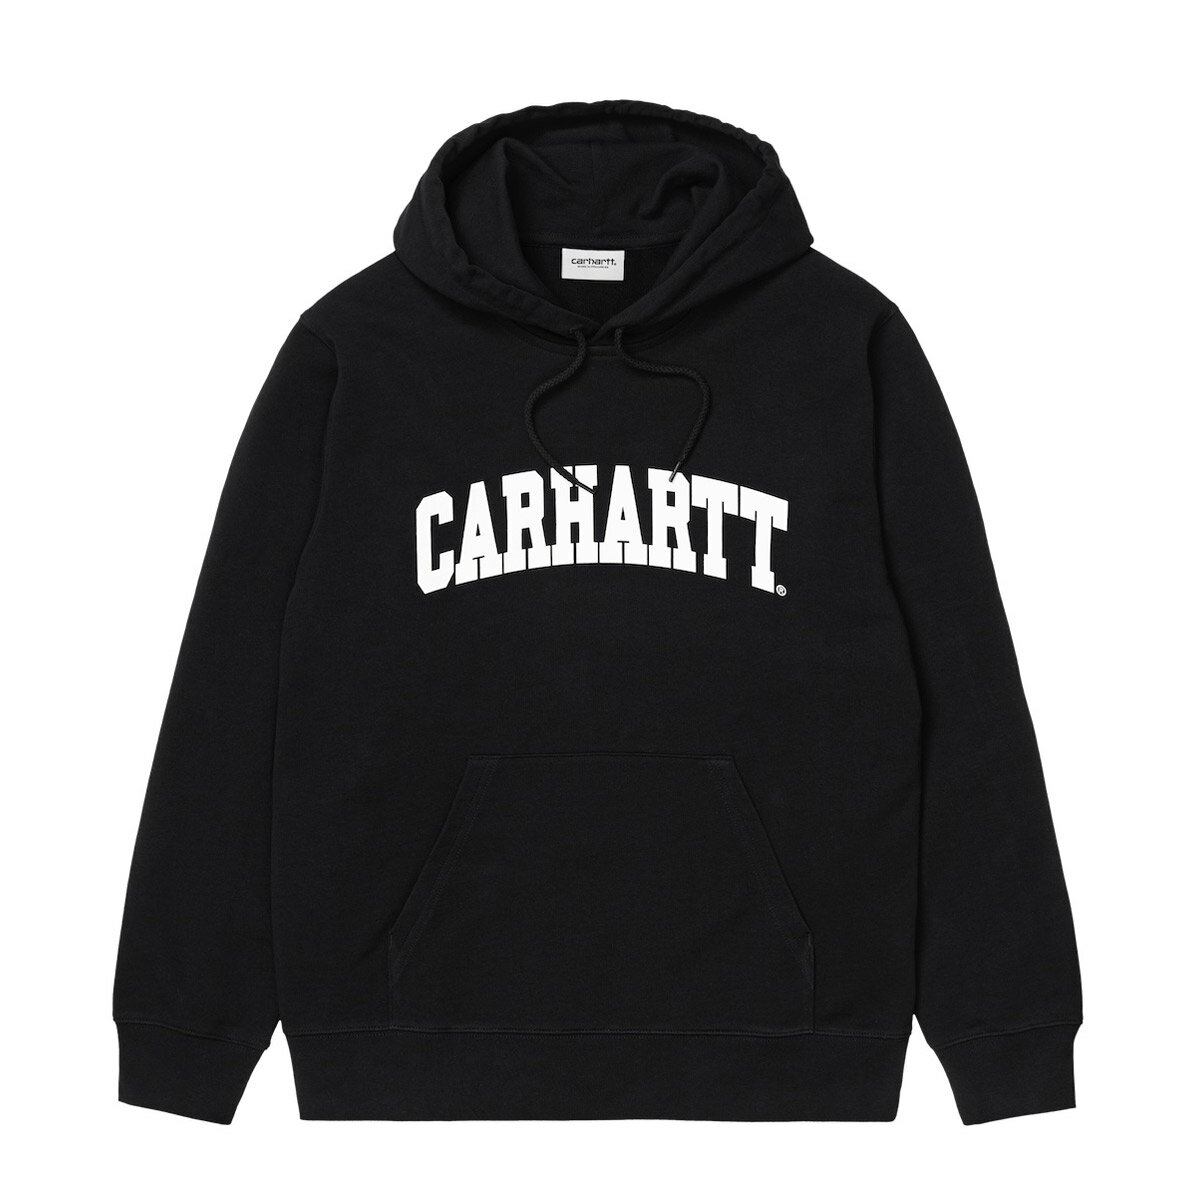 CARHARTT HOODED UNIVERSITY SWEATSHIRT(Black / White)(カーハート フーデッド ユニバーシティ スウェット シャツ)【メンズ】【パーカー】【21FW-I】